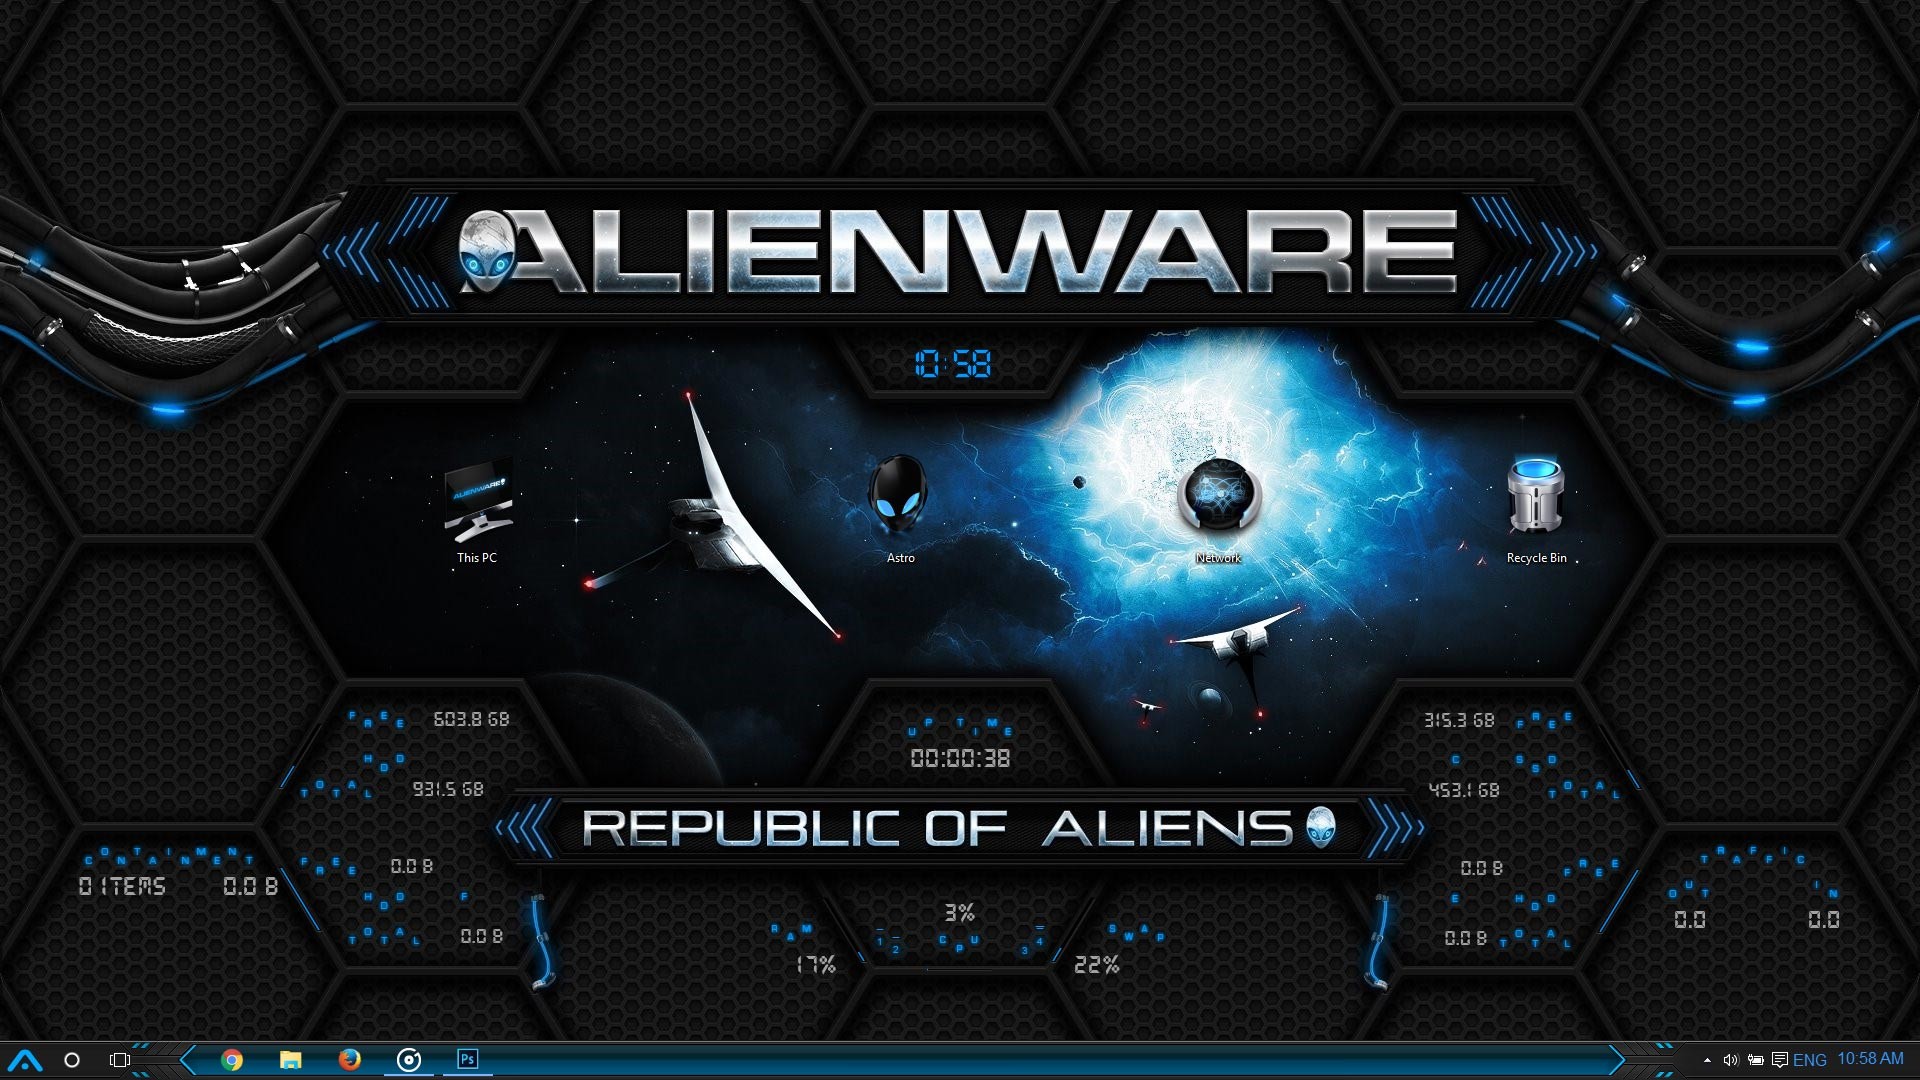 Alienware Windows 10 Theme